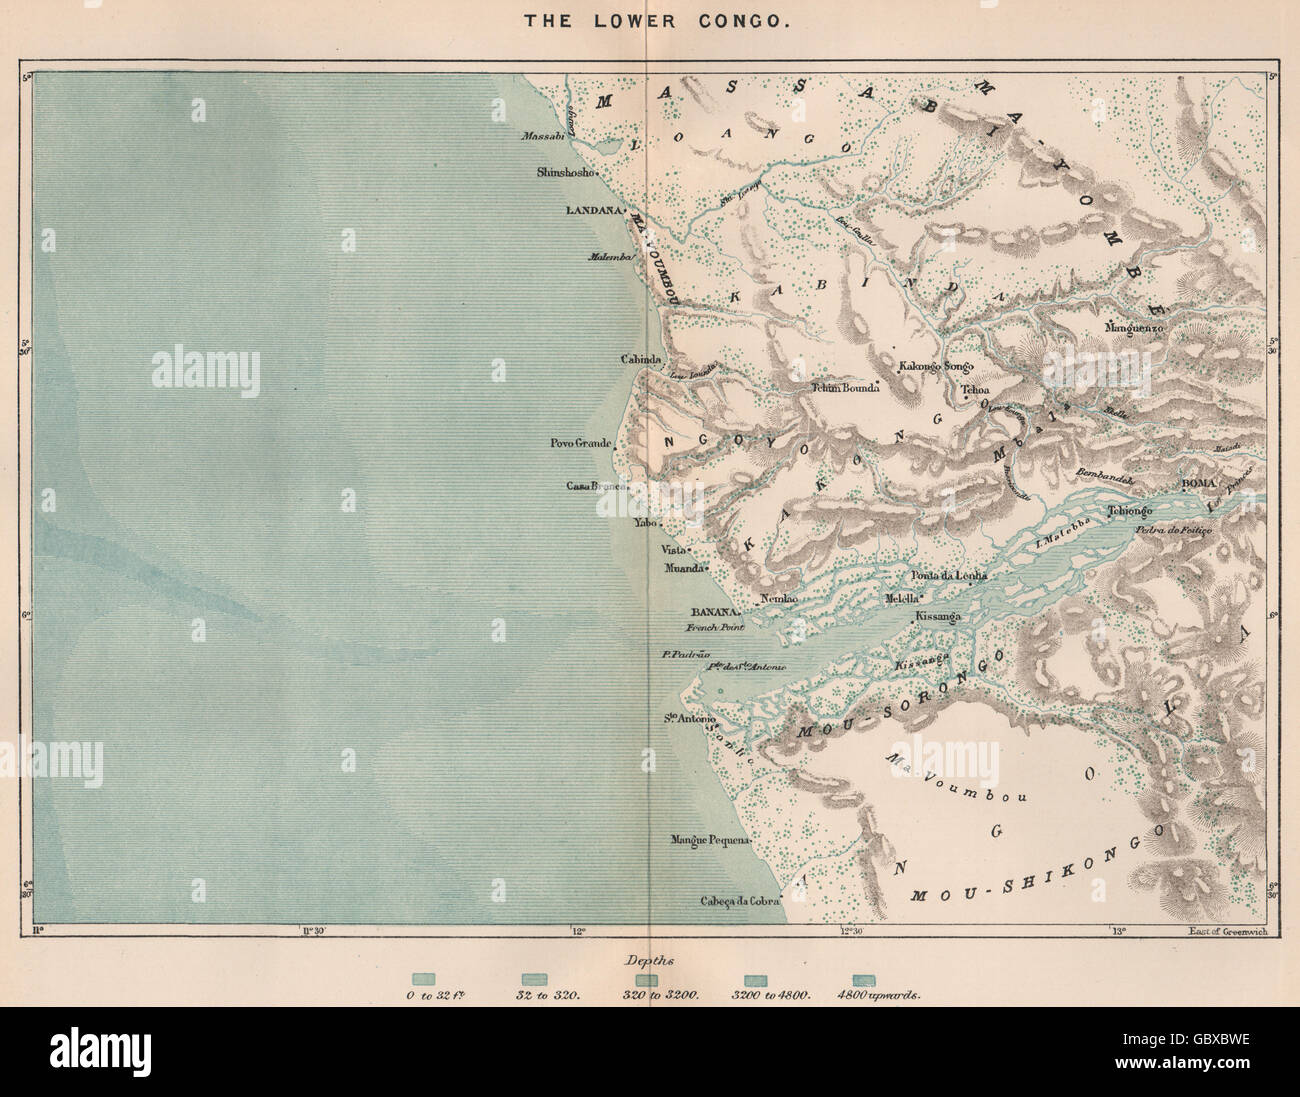 The Lower Congo. Congo Basin, 1885 antique map Stock Photo